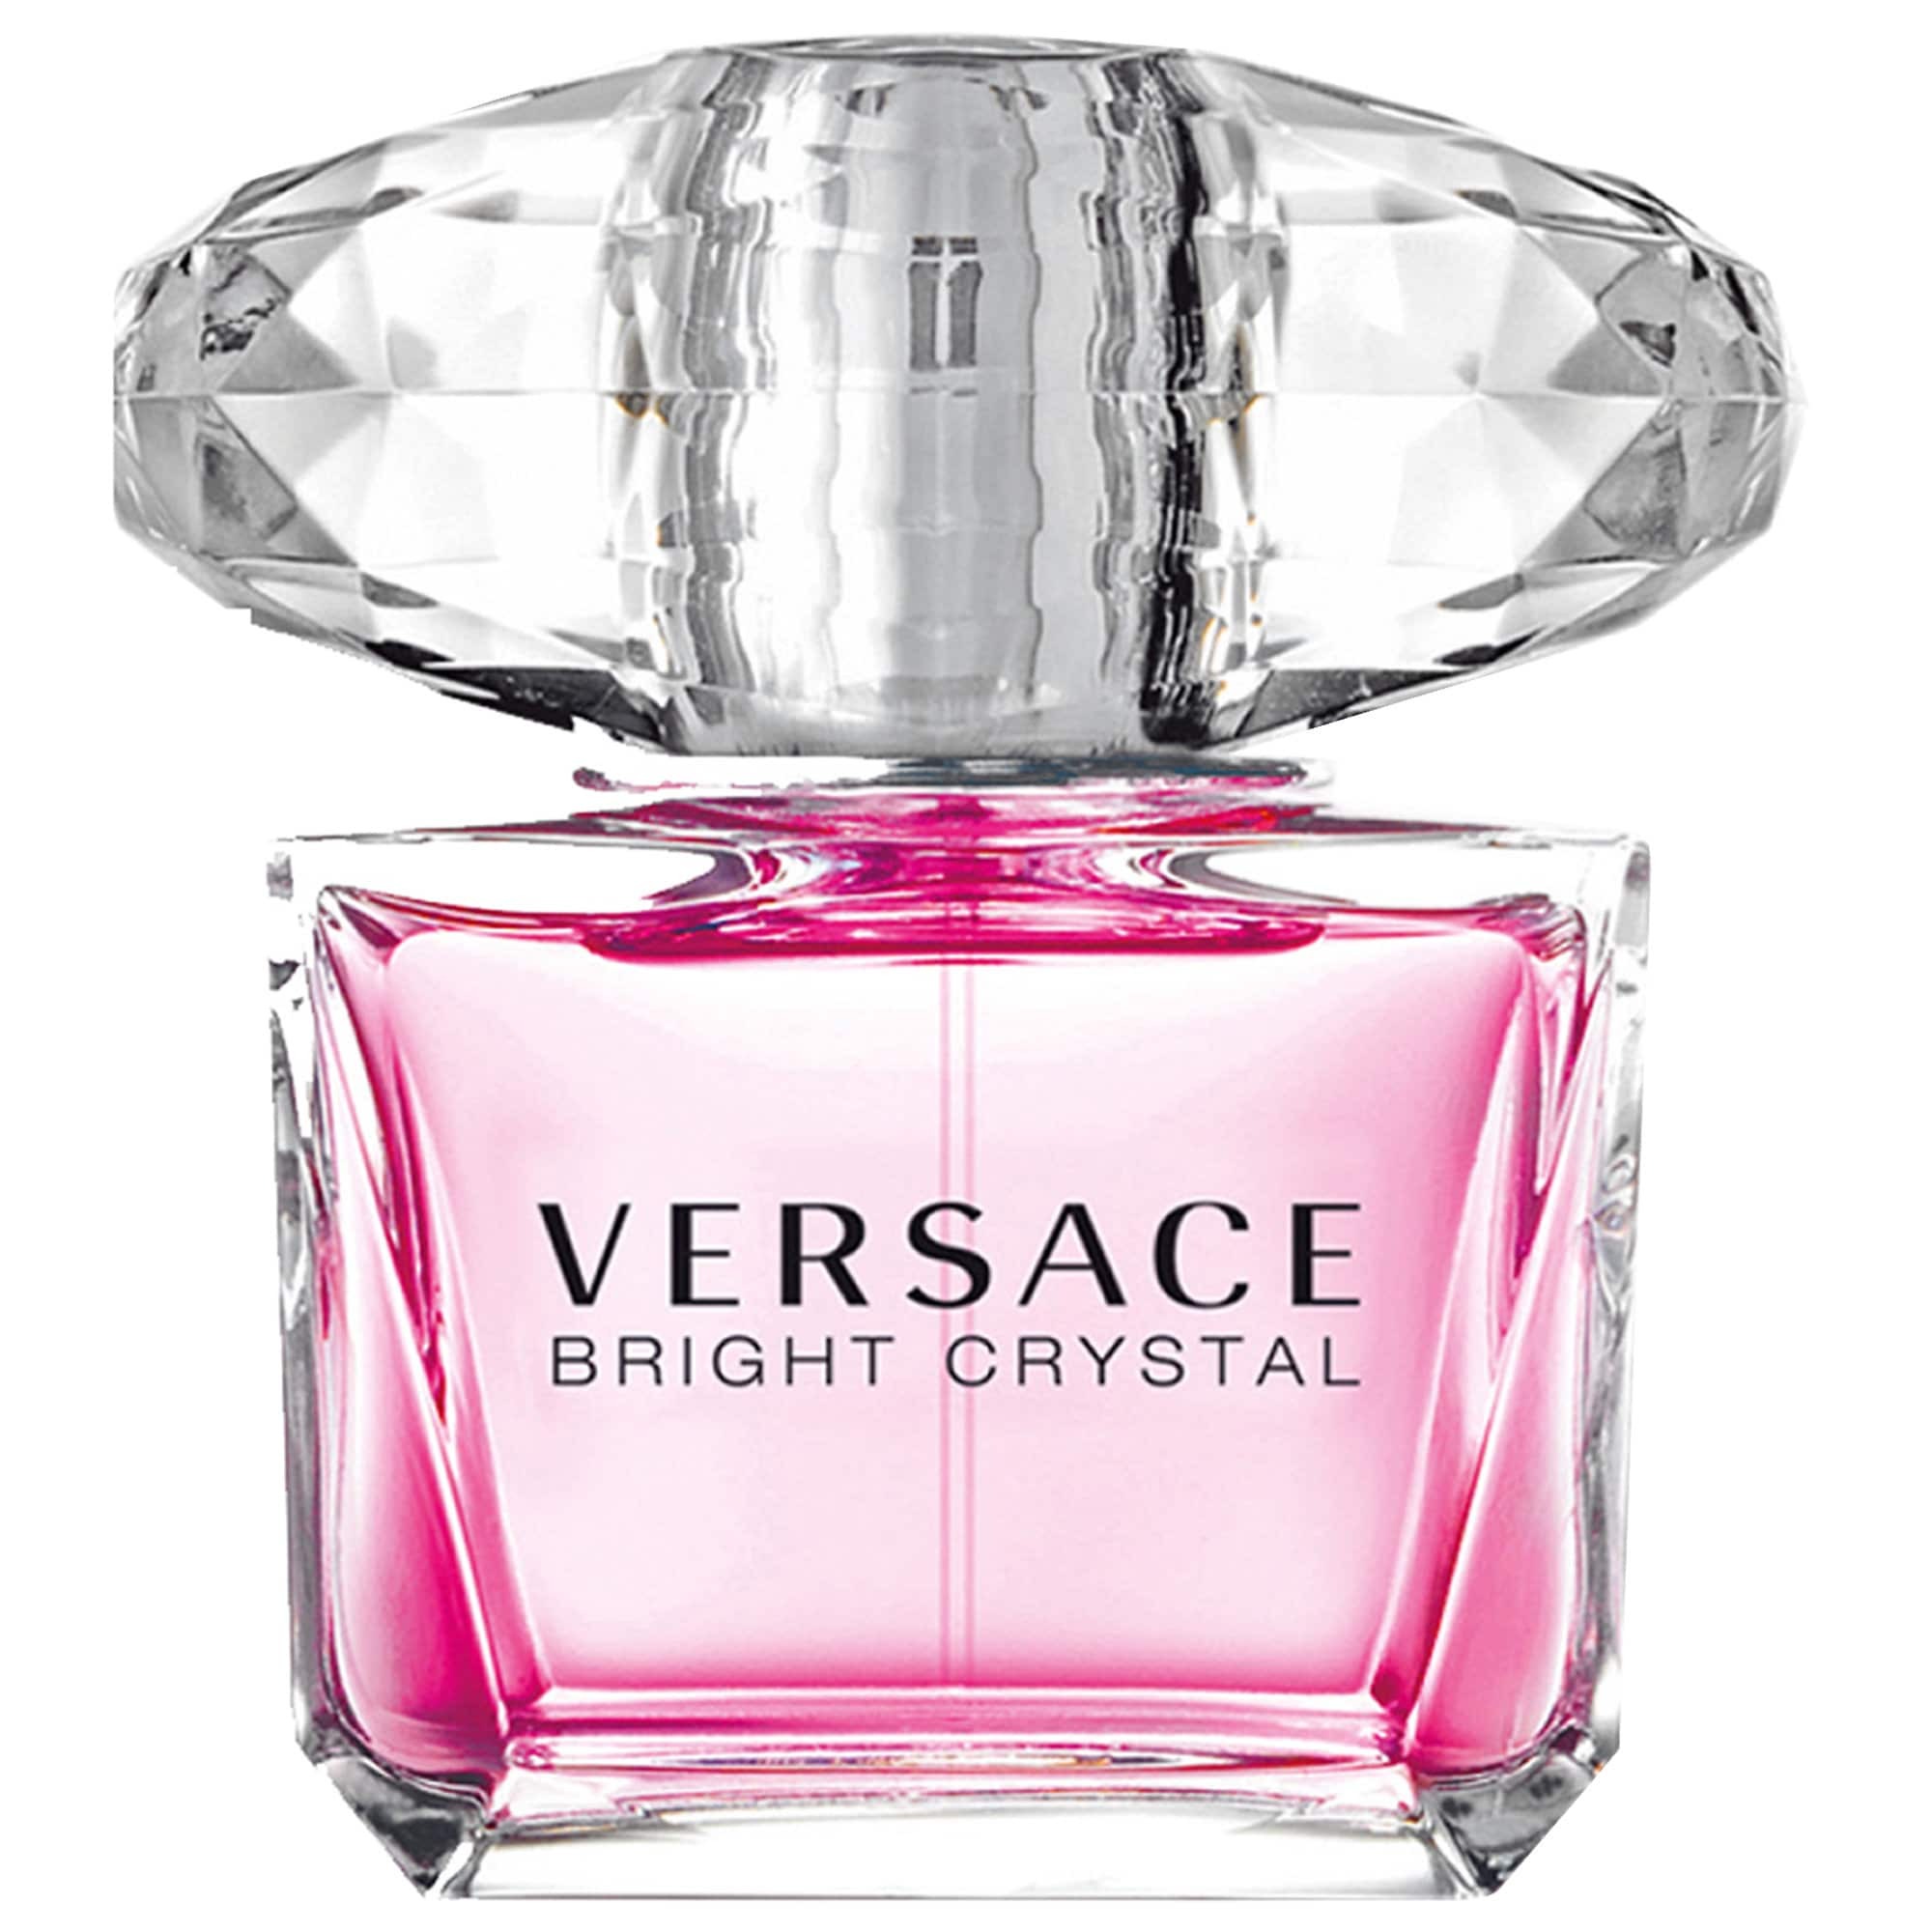 Versace Bright Crystal Eau de Toilette Spray for Women, 3 Fl Oz (Original)